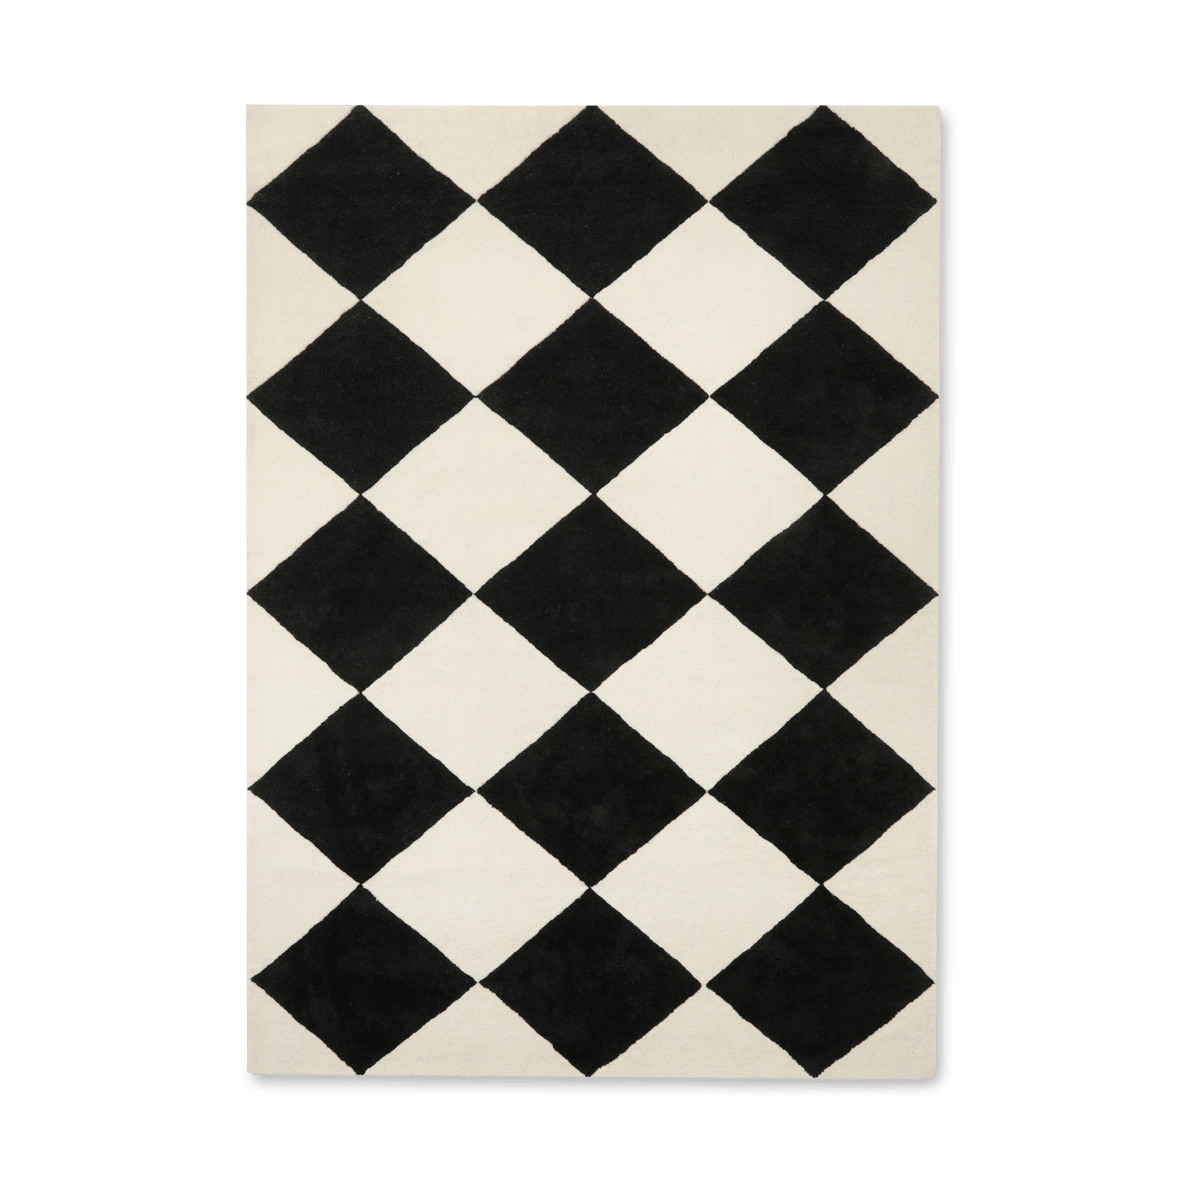 Tinted Tenman villamatto 250×350 cm Black-white